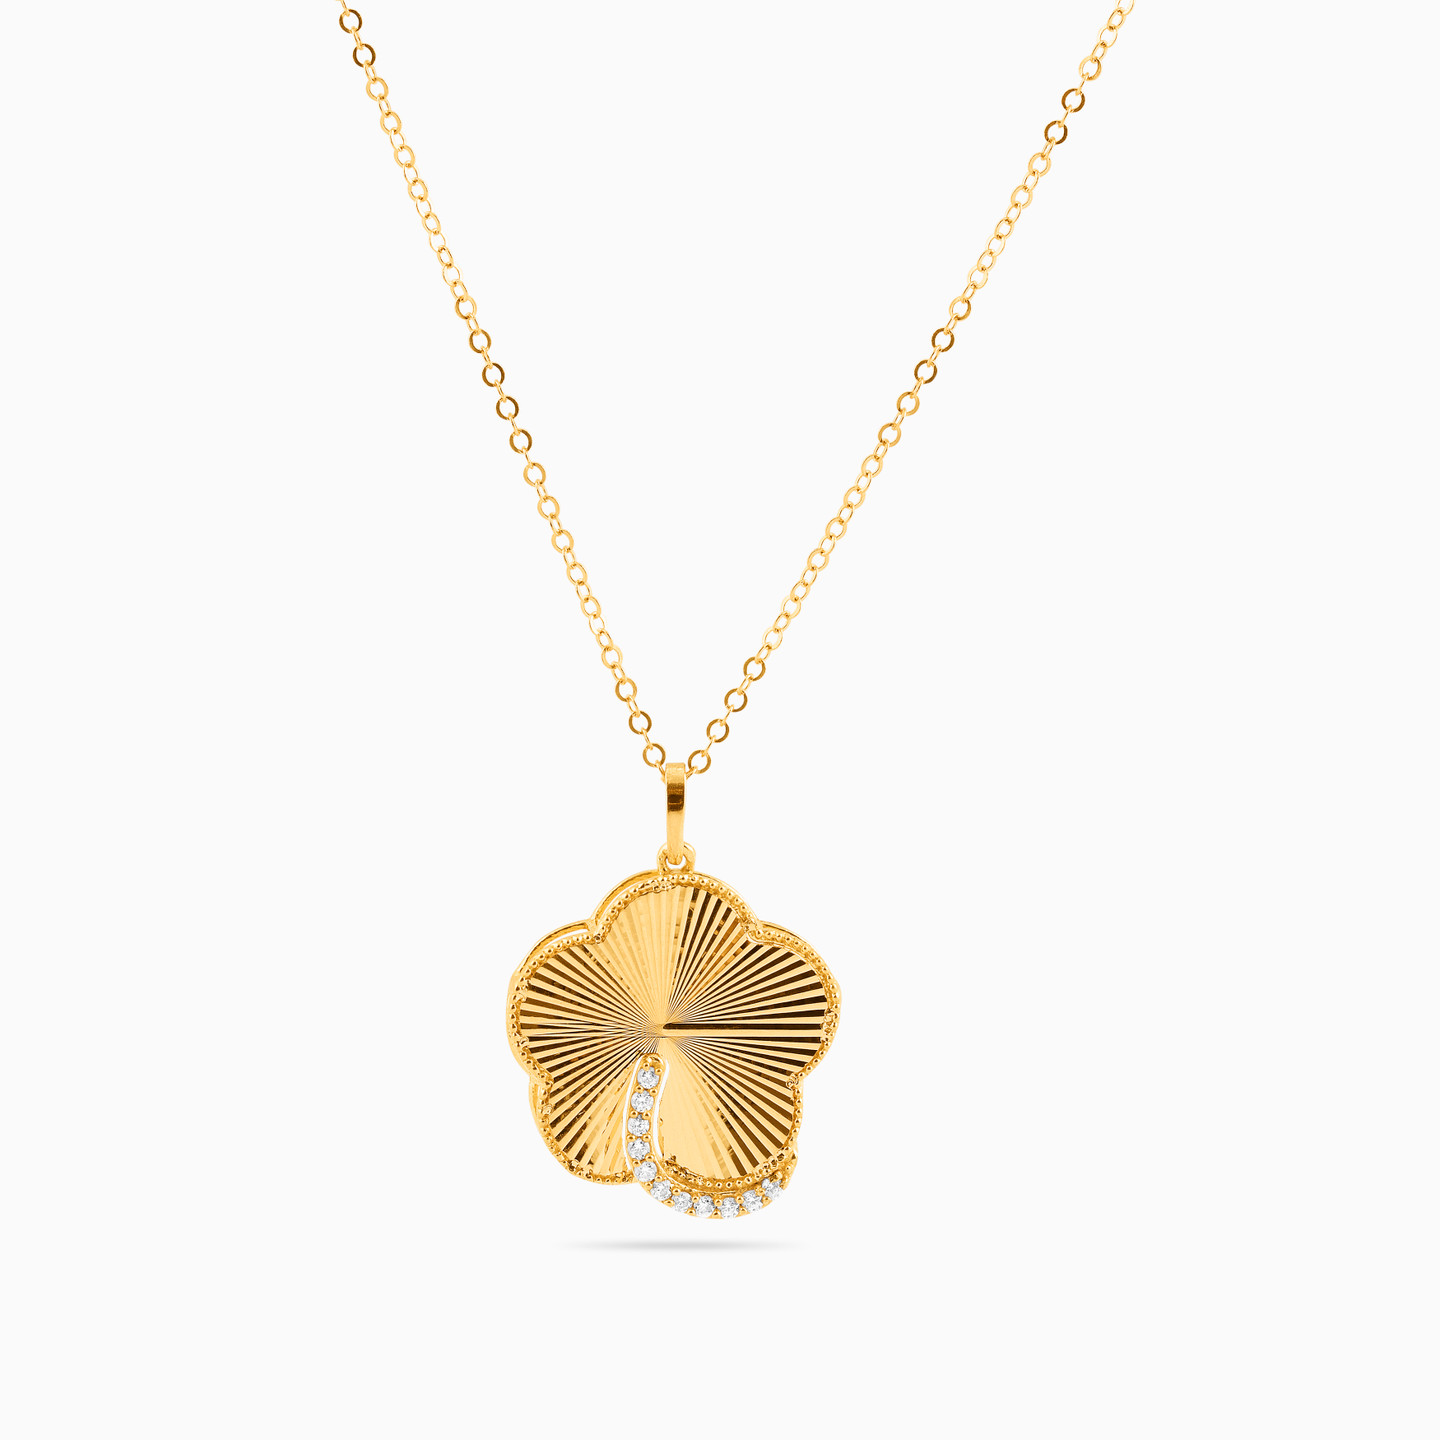 21K Gold Cubic Zirconia Pendant Necklace - 3